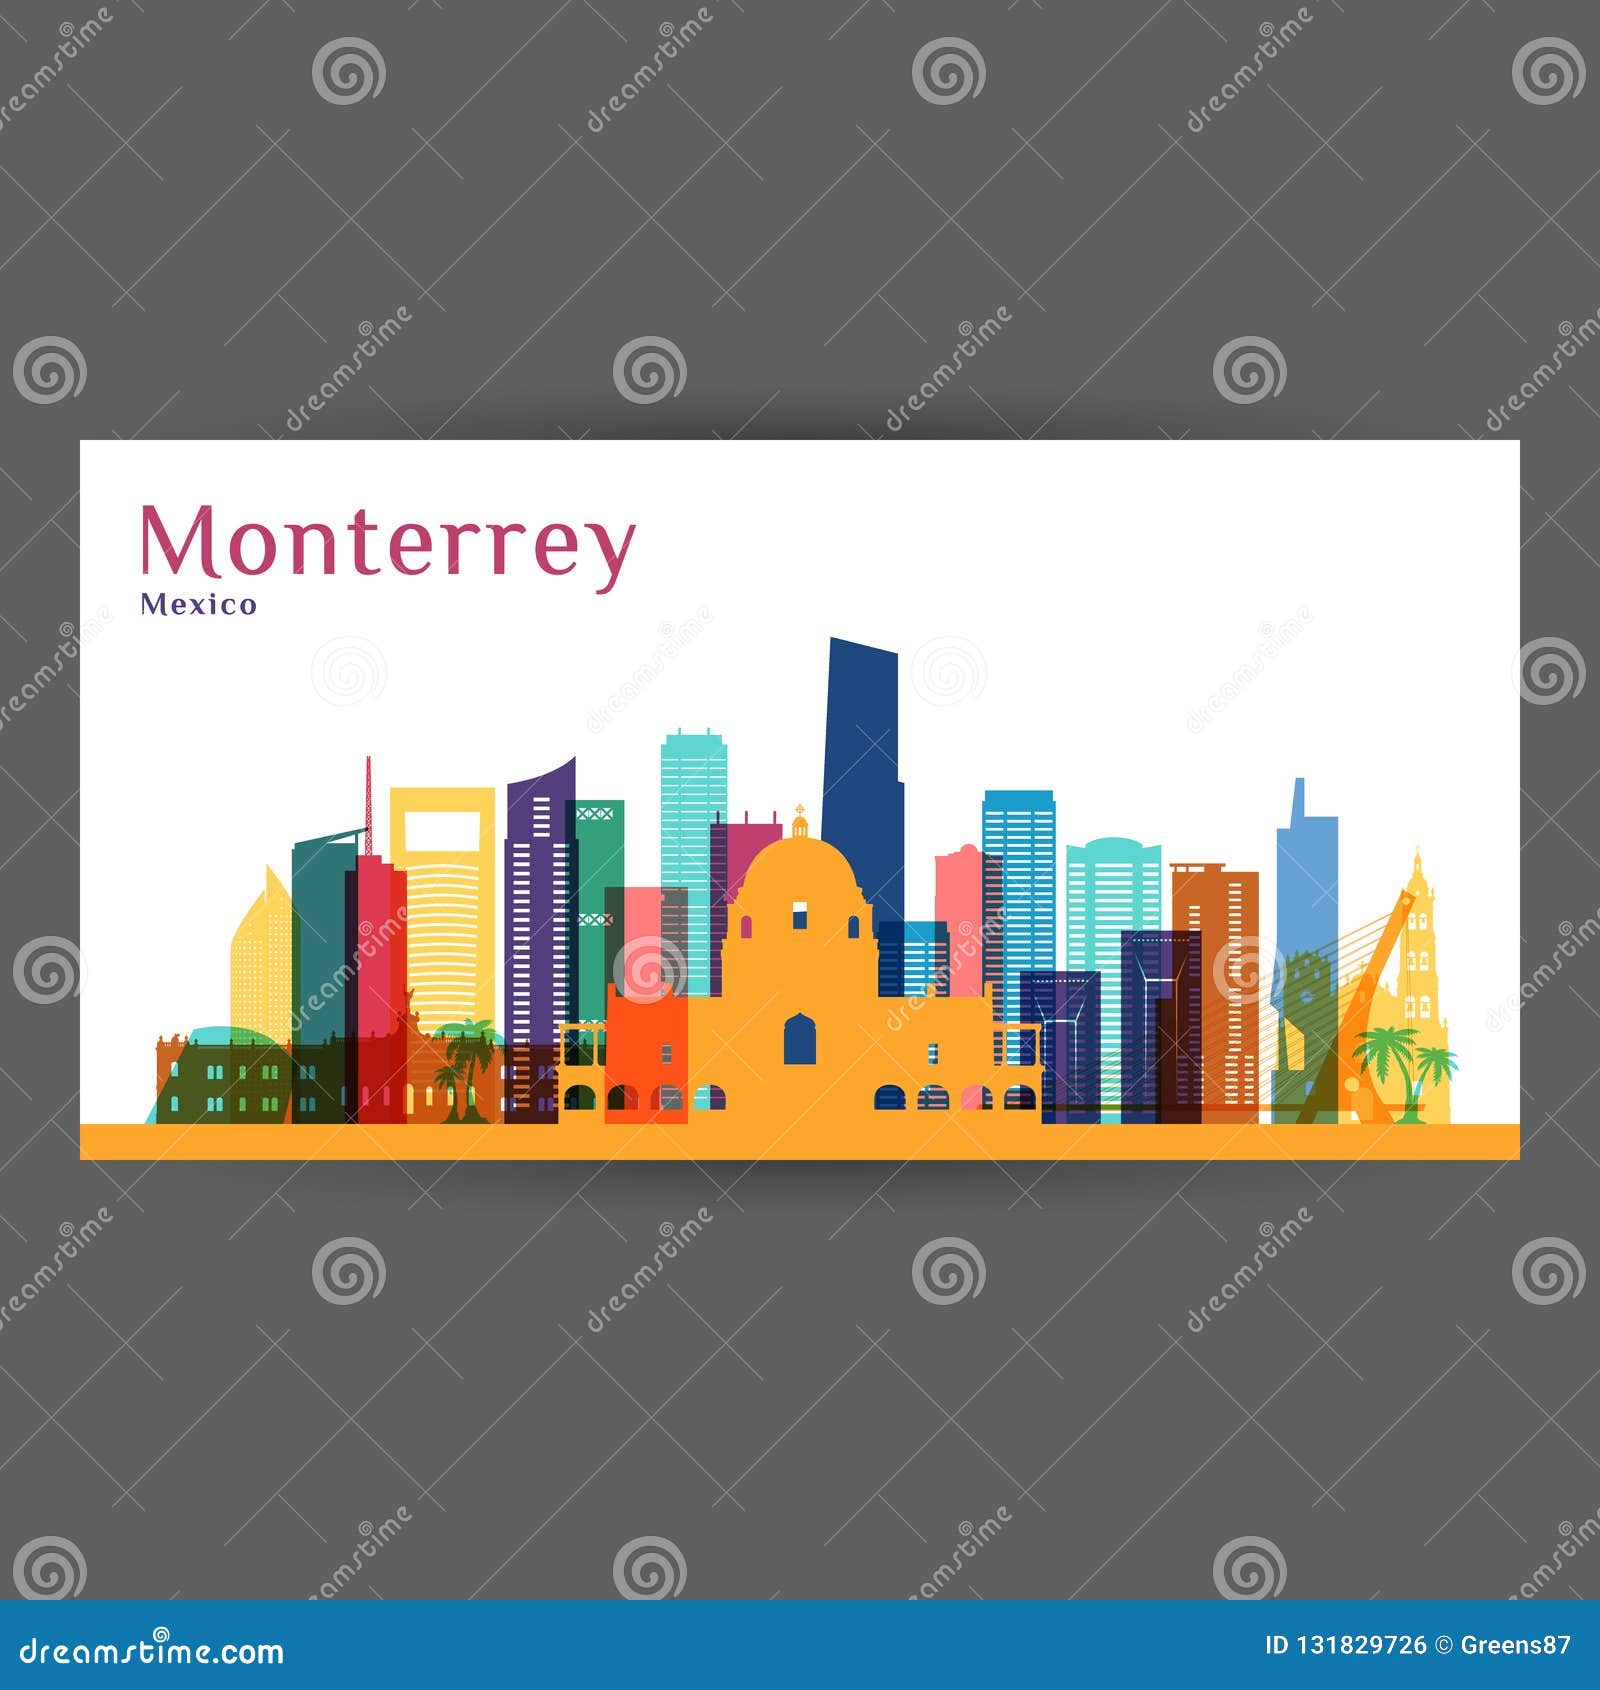 monterrey city architecture silhouette.